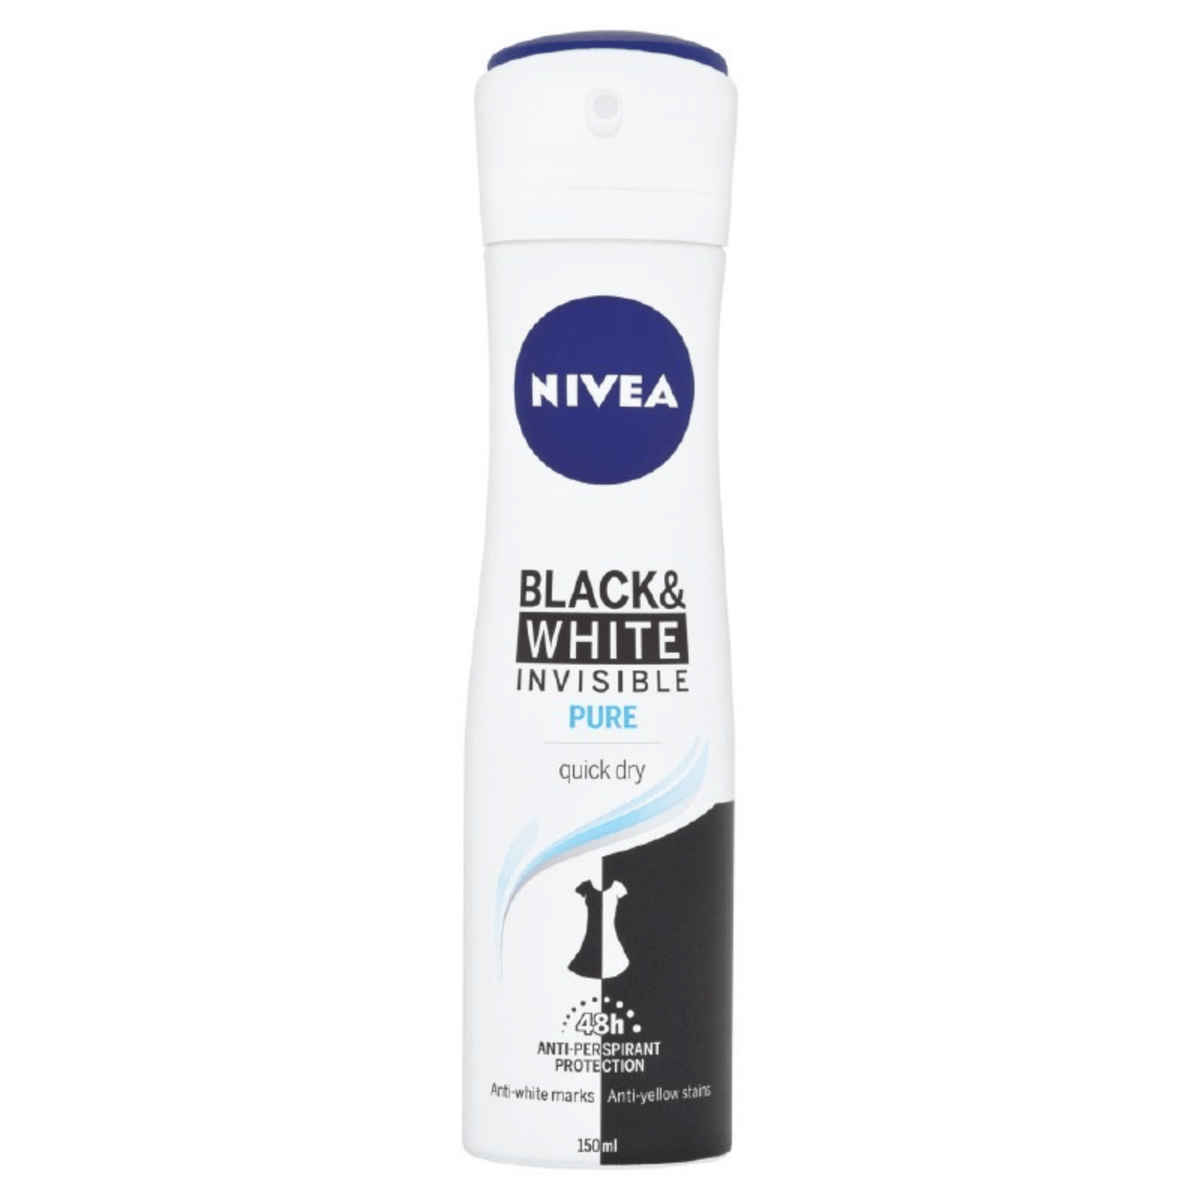 Primary Image of Women's Spray Black & White Invisible Pure Anti-Perspirant Deodorant